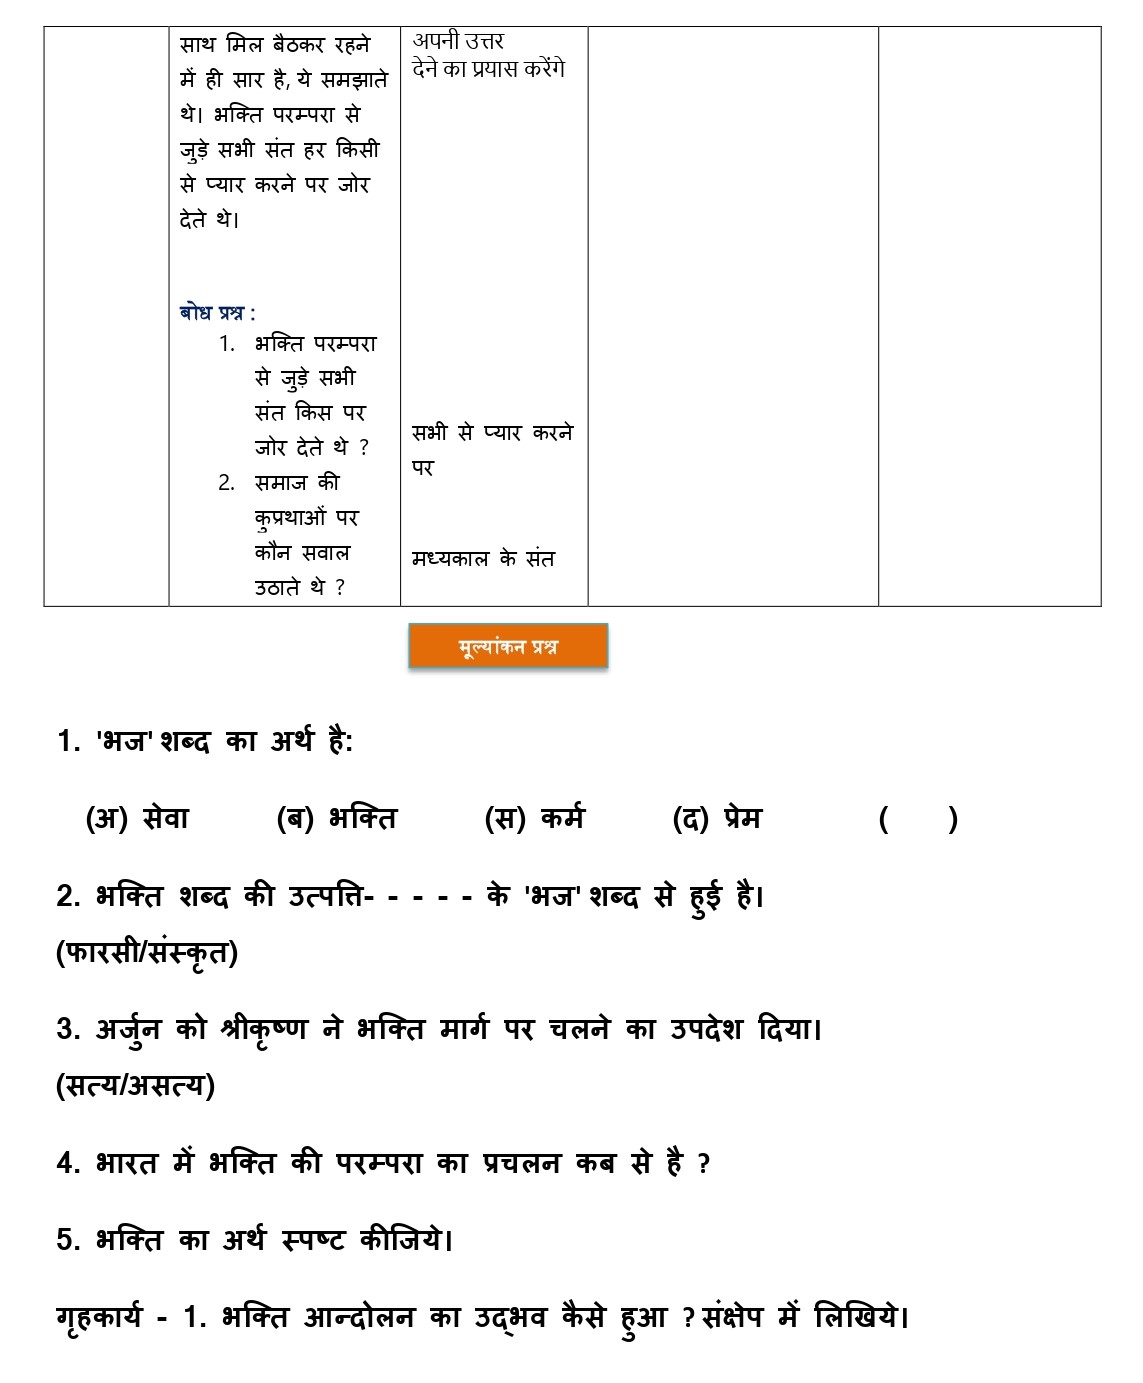 History lesson plan in hindi